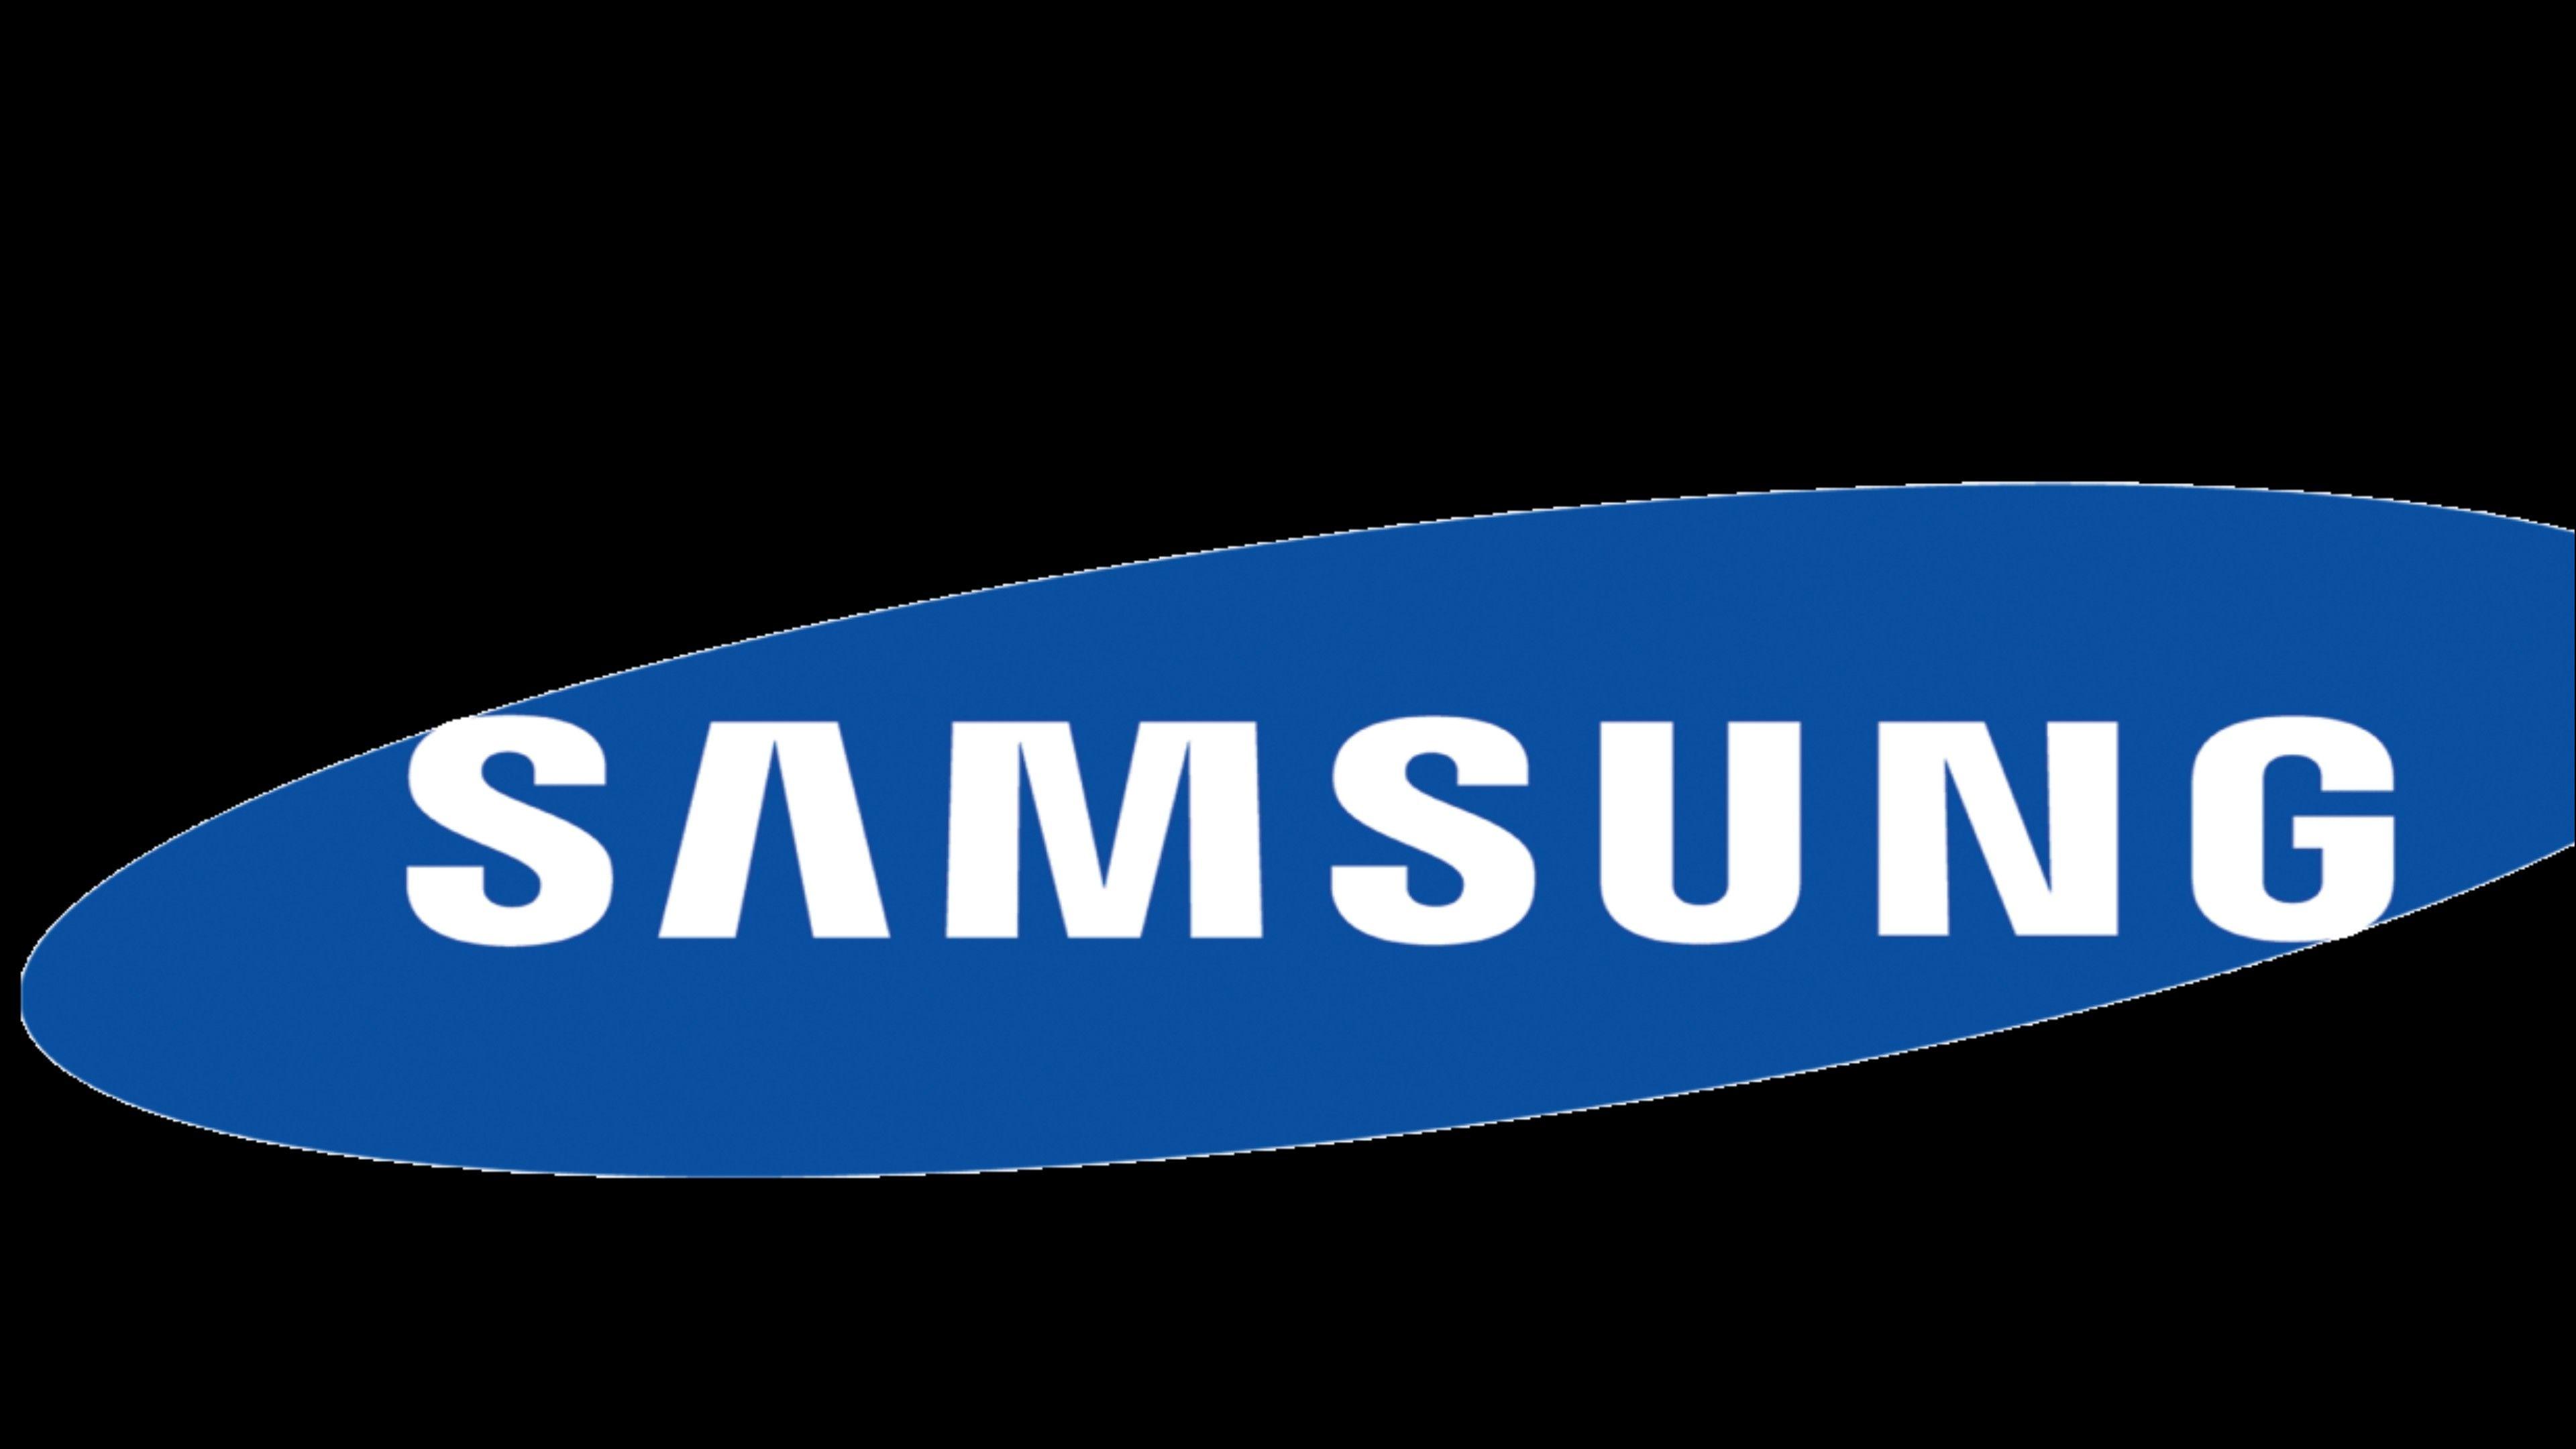 Animated Samsung Logo - Samsung Logo Wallpaper - WallpaperSafari